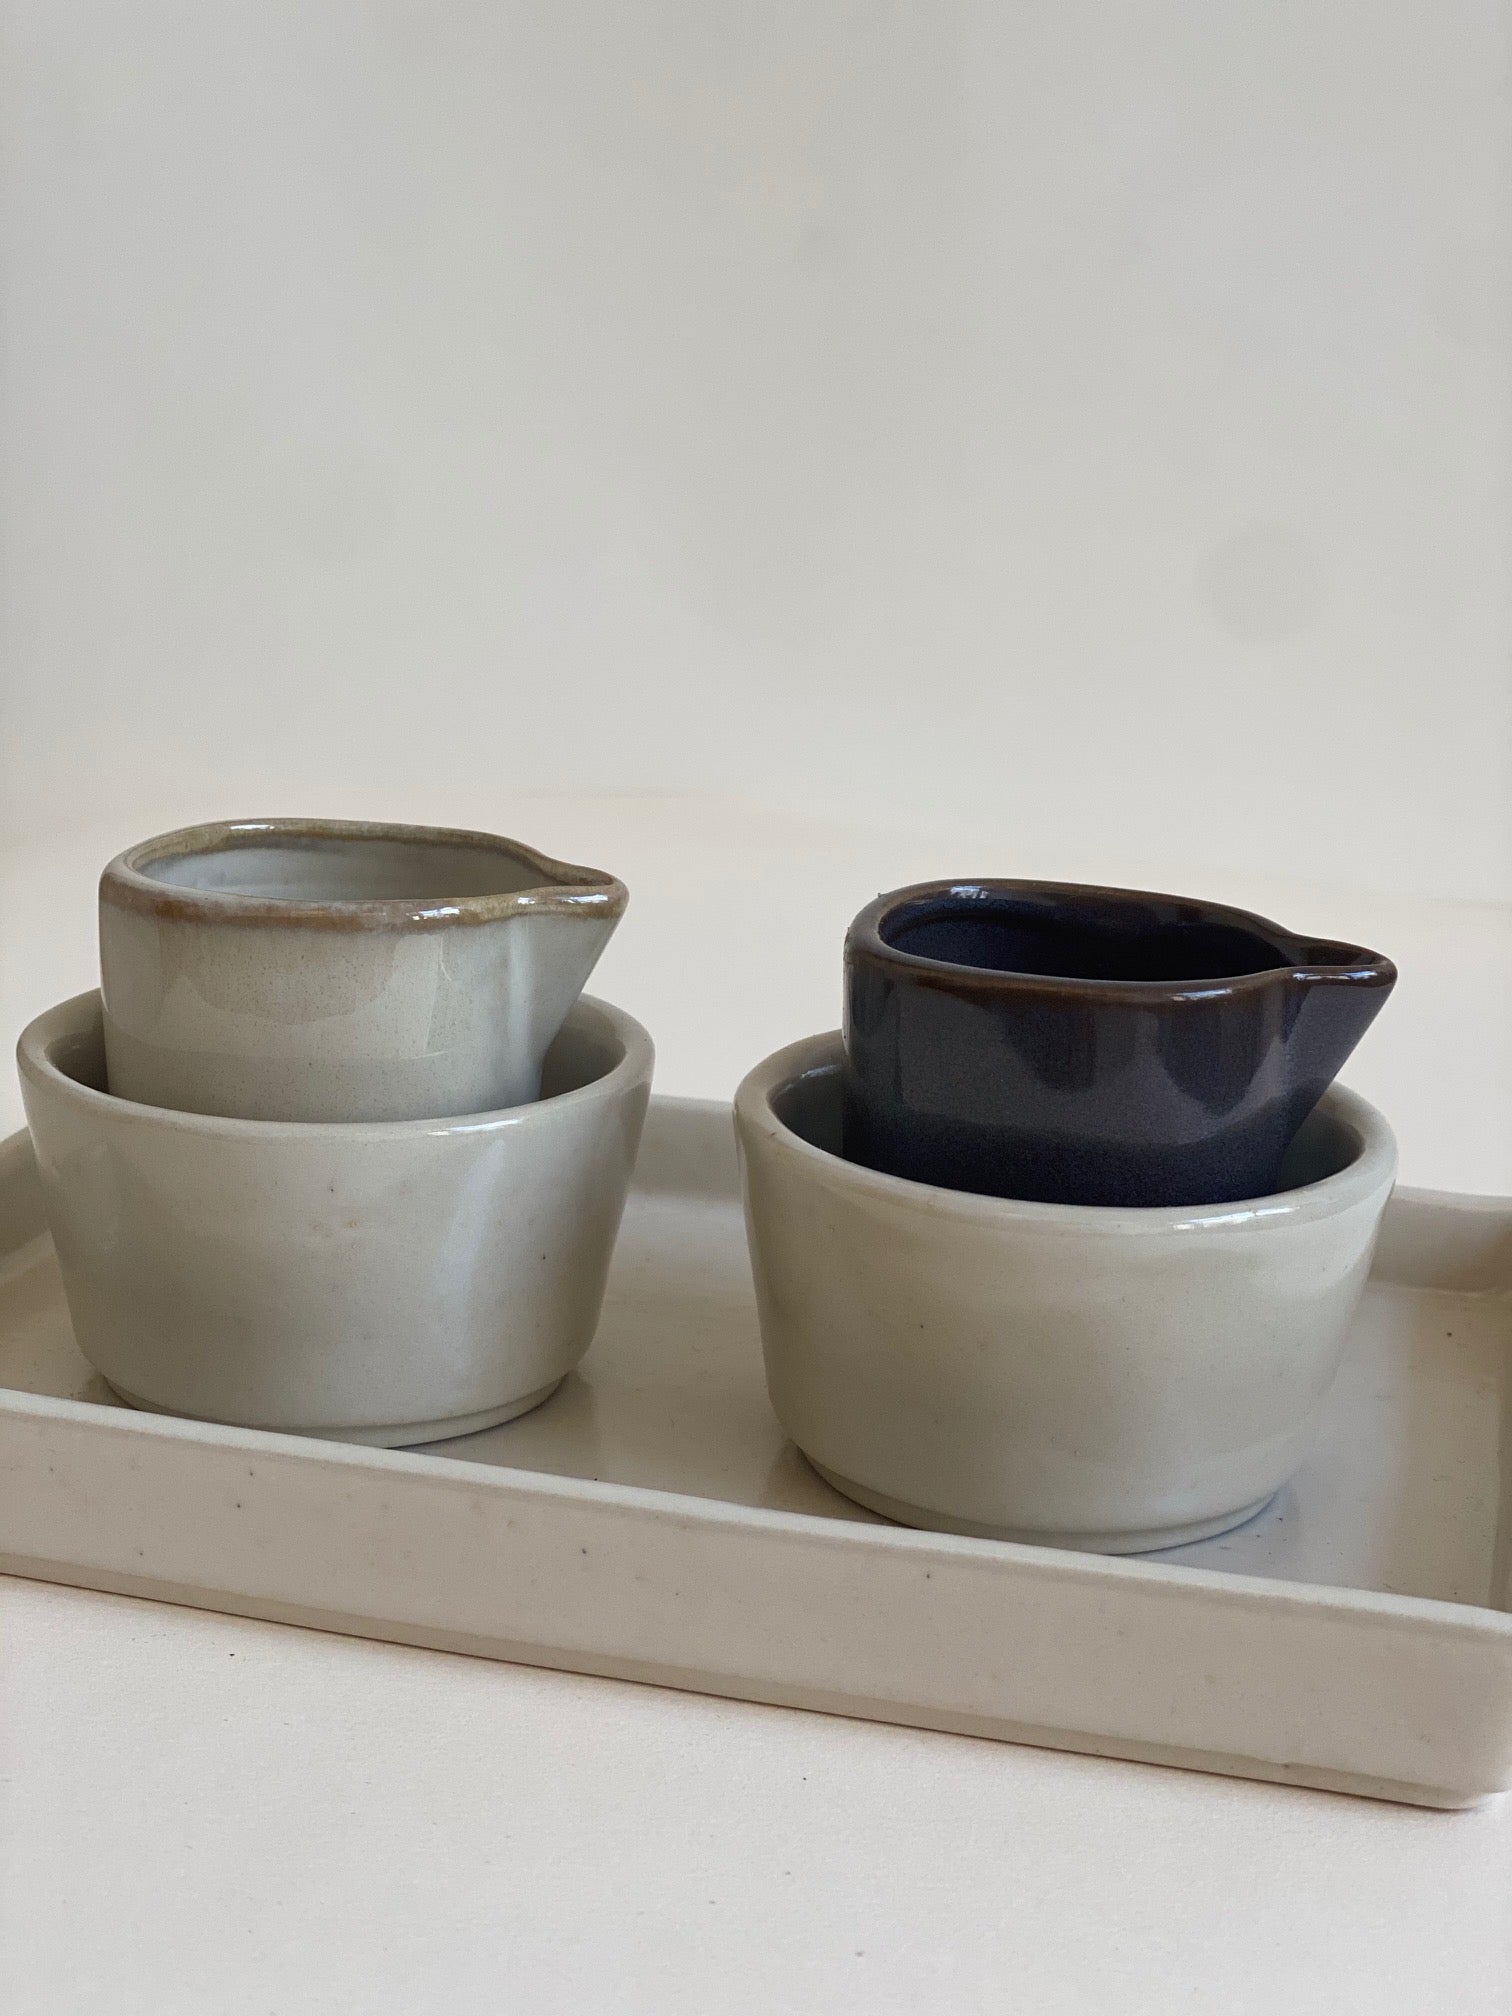 Small ceramic bowls